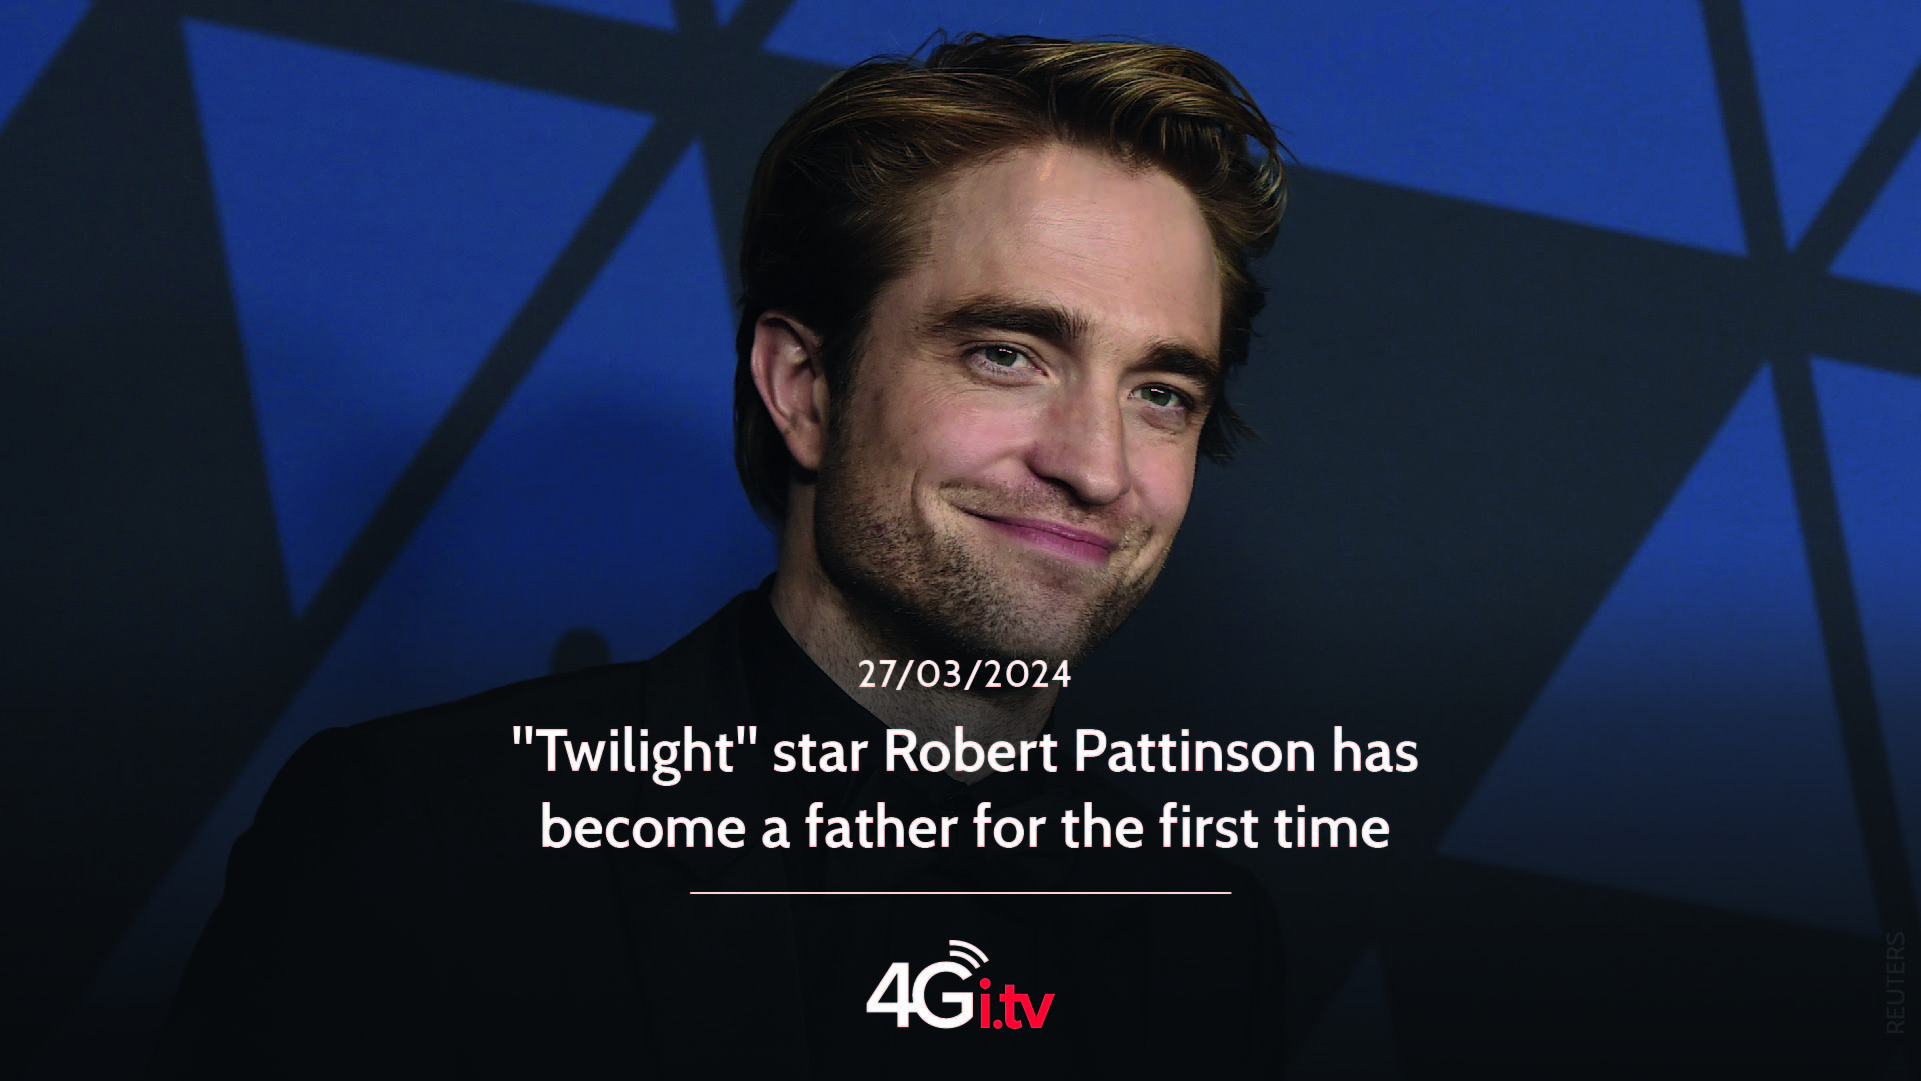 Lesen Sie mehr über den Artikel “Twilight” star Robert Pattinson has become a father for the first time